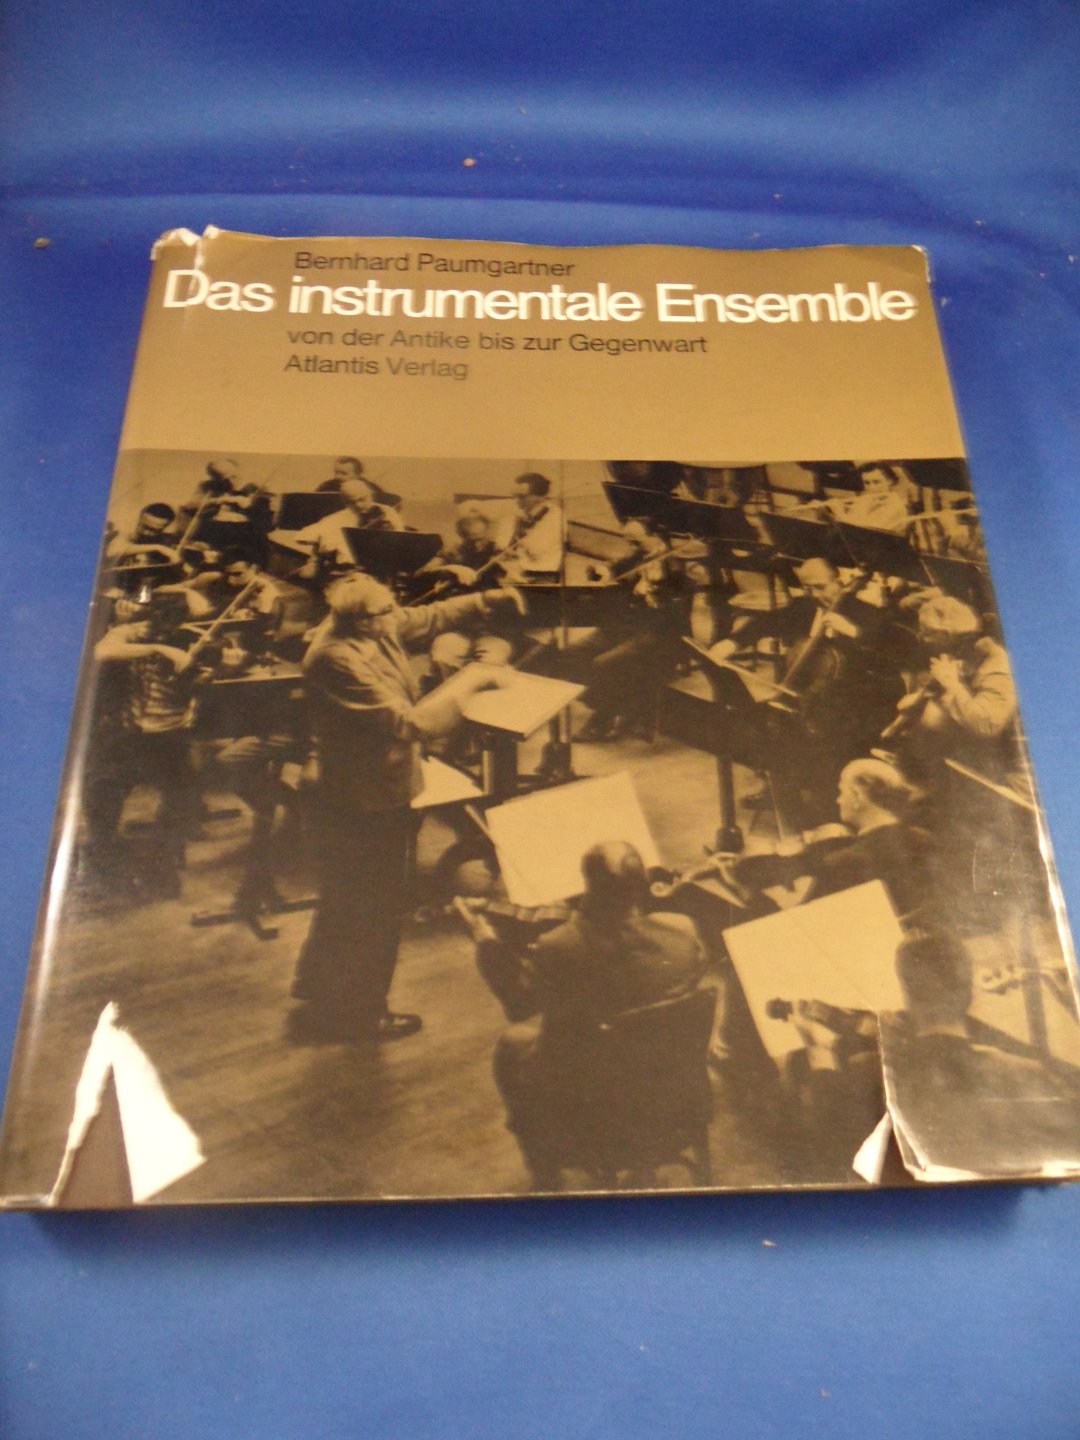 Paumgartner, Bernhard - Das instrumentale ensemble